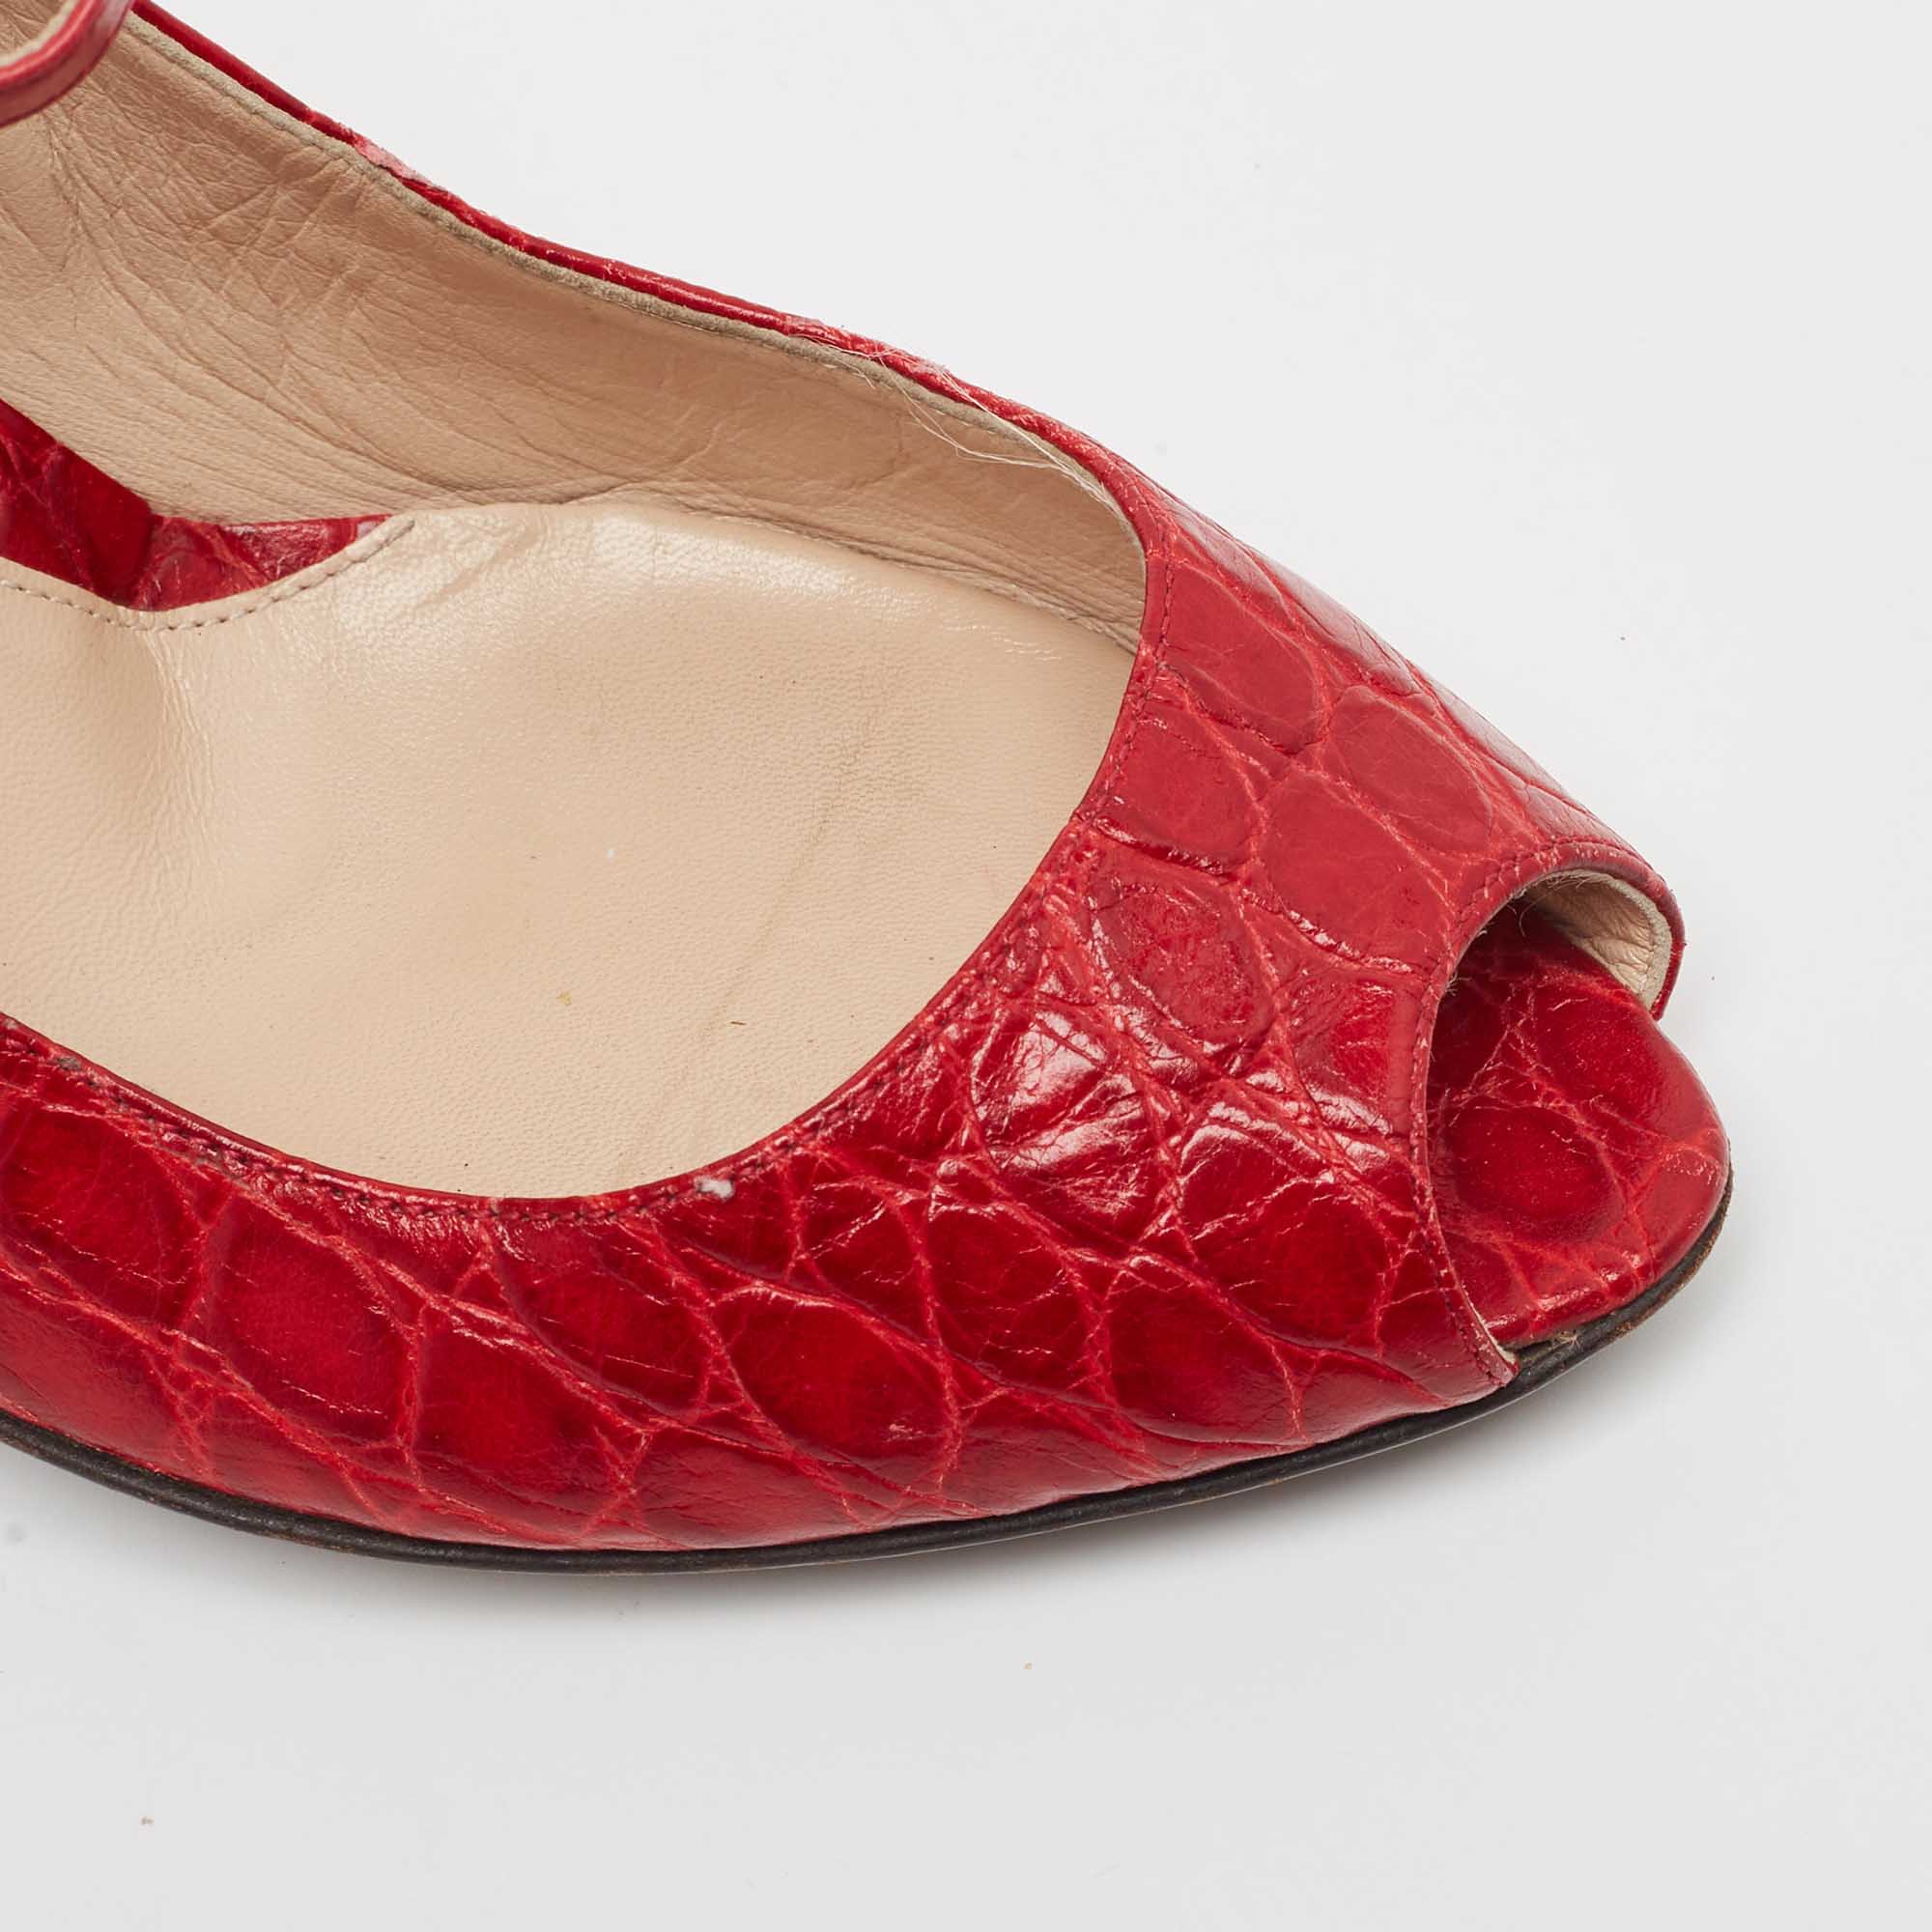 Fendi Red Croc Embossed Leather Peep Toe Wedges Pumps Size 39.5